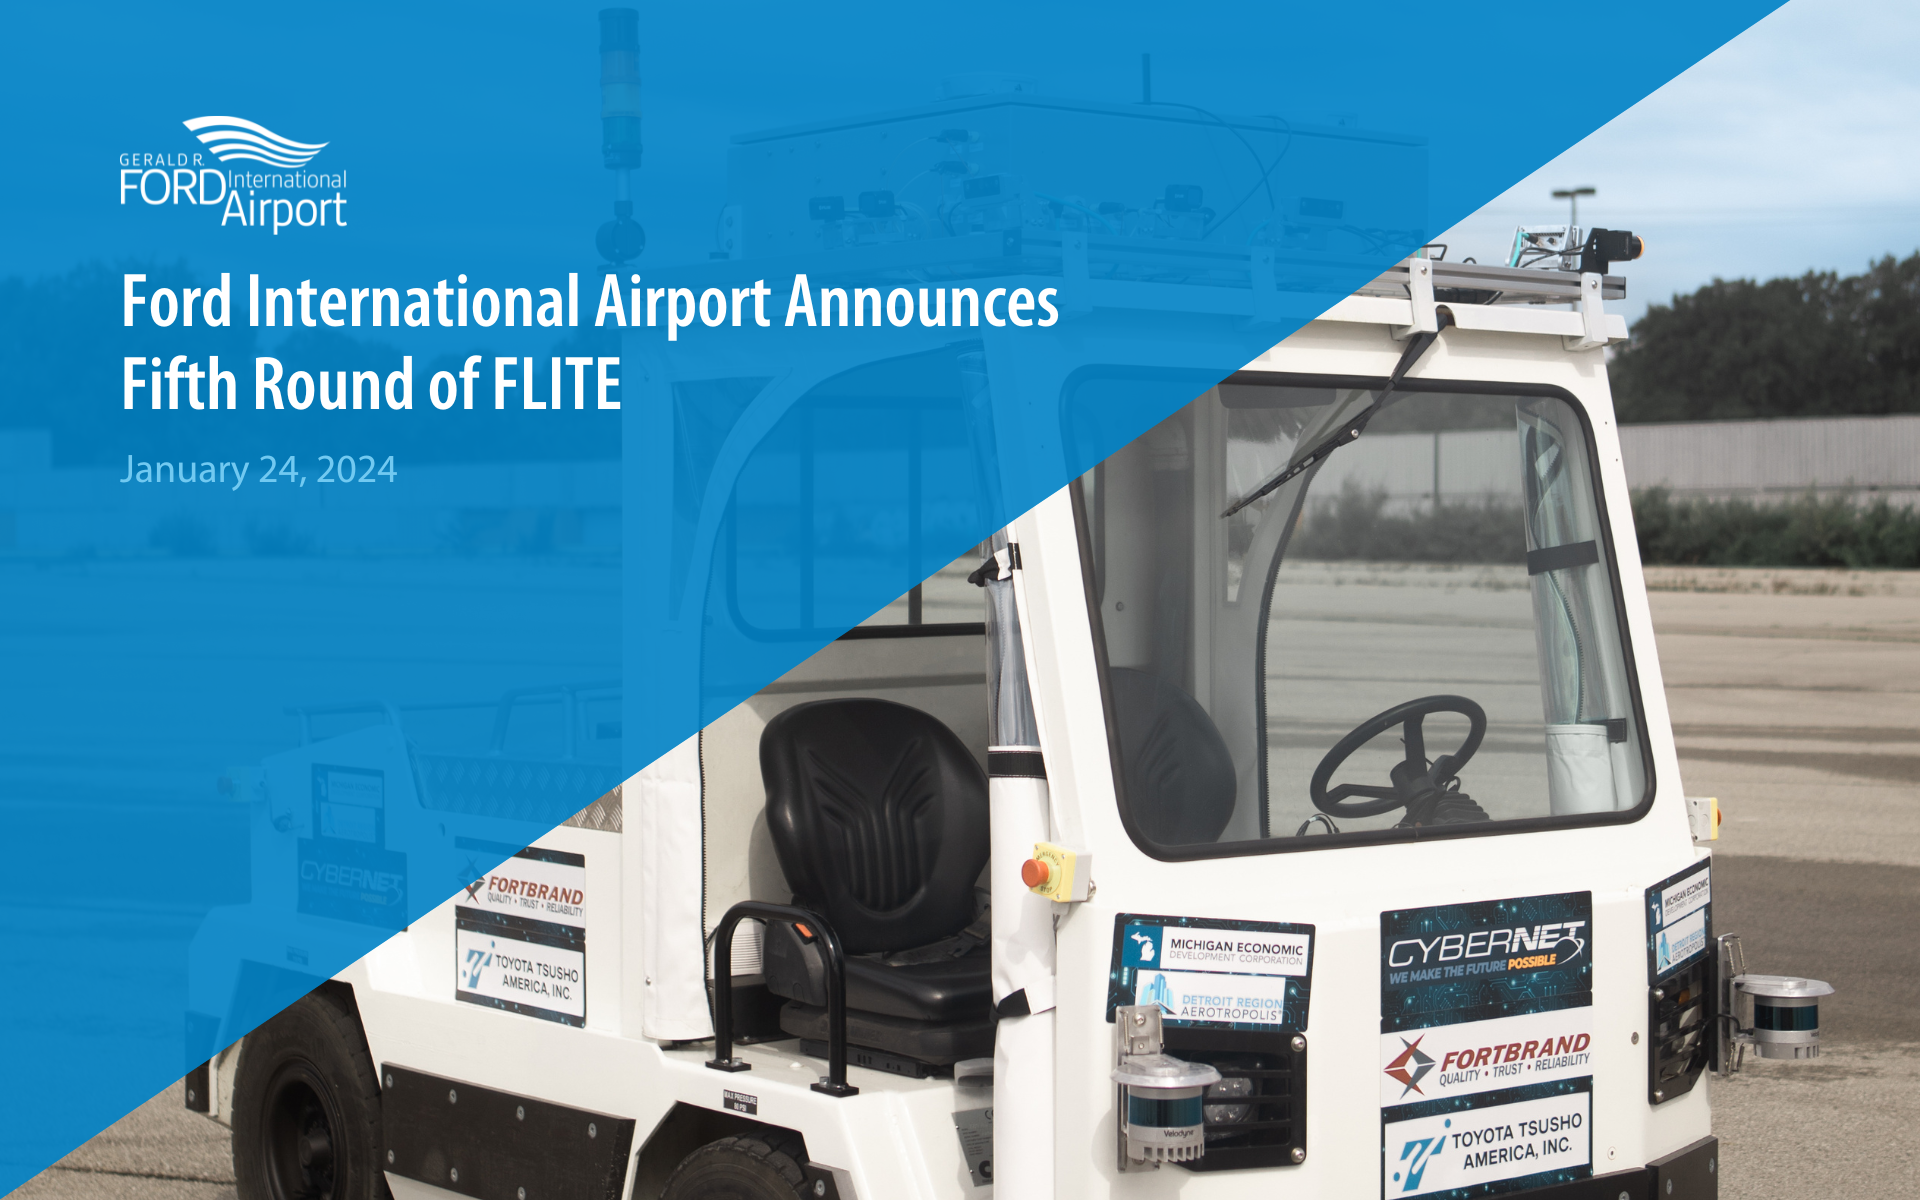 Ford International Airport Unveils Cutting-Edge Technologies in FLITE Program